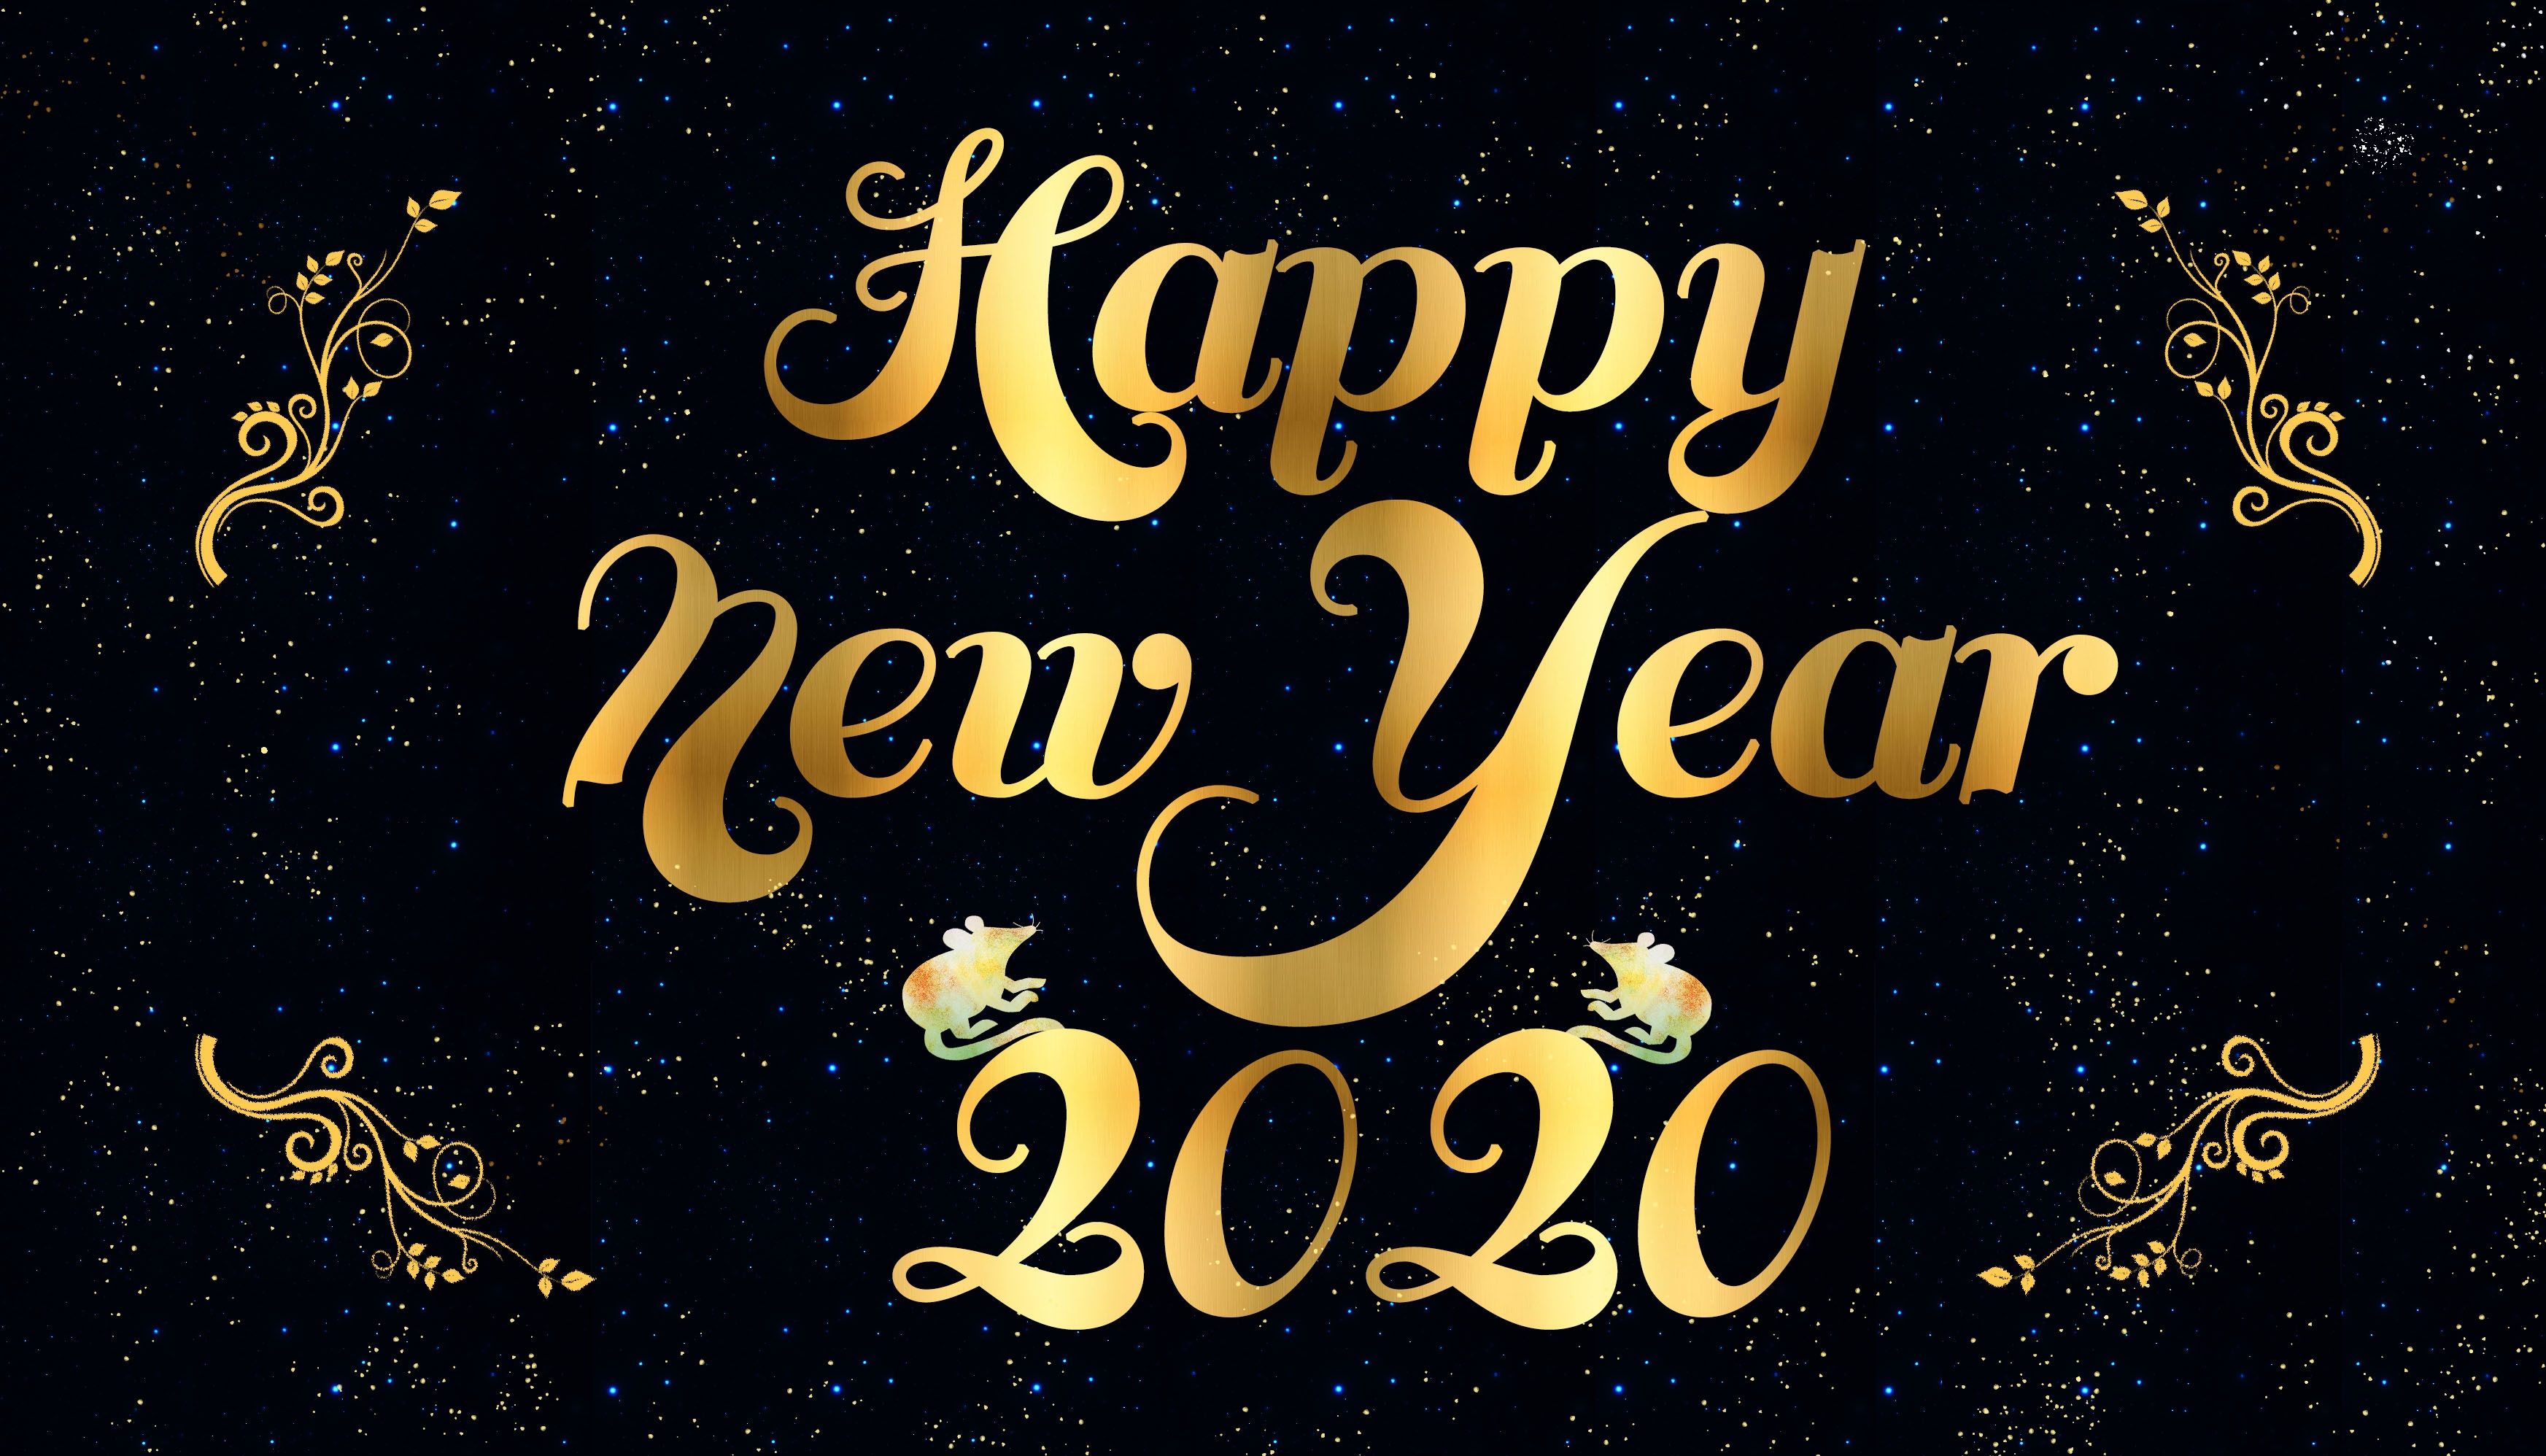 Happy New Year New Year New Year 2020 3490x1996